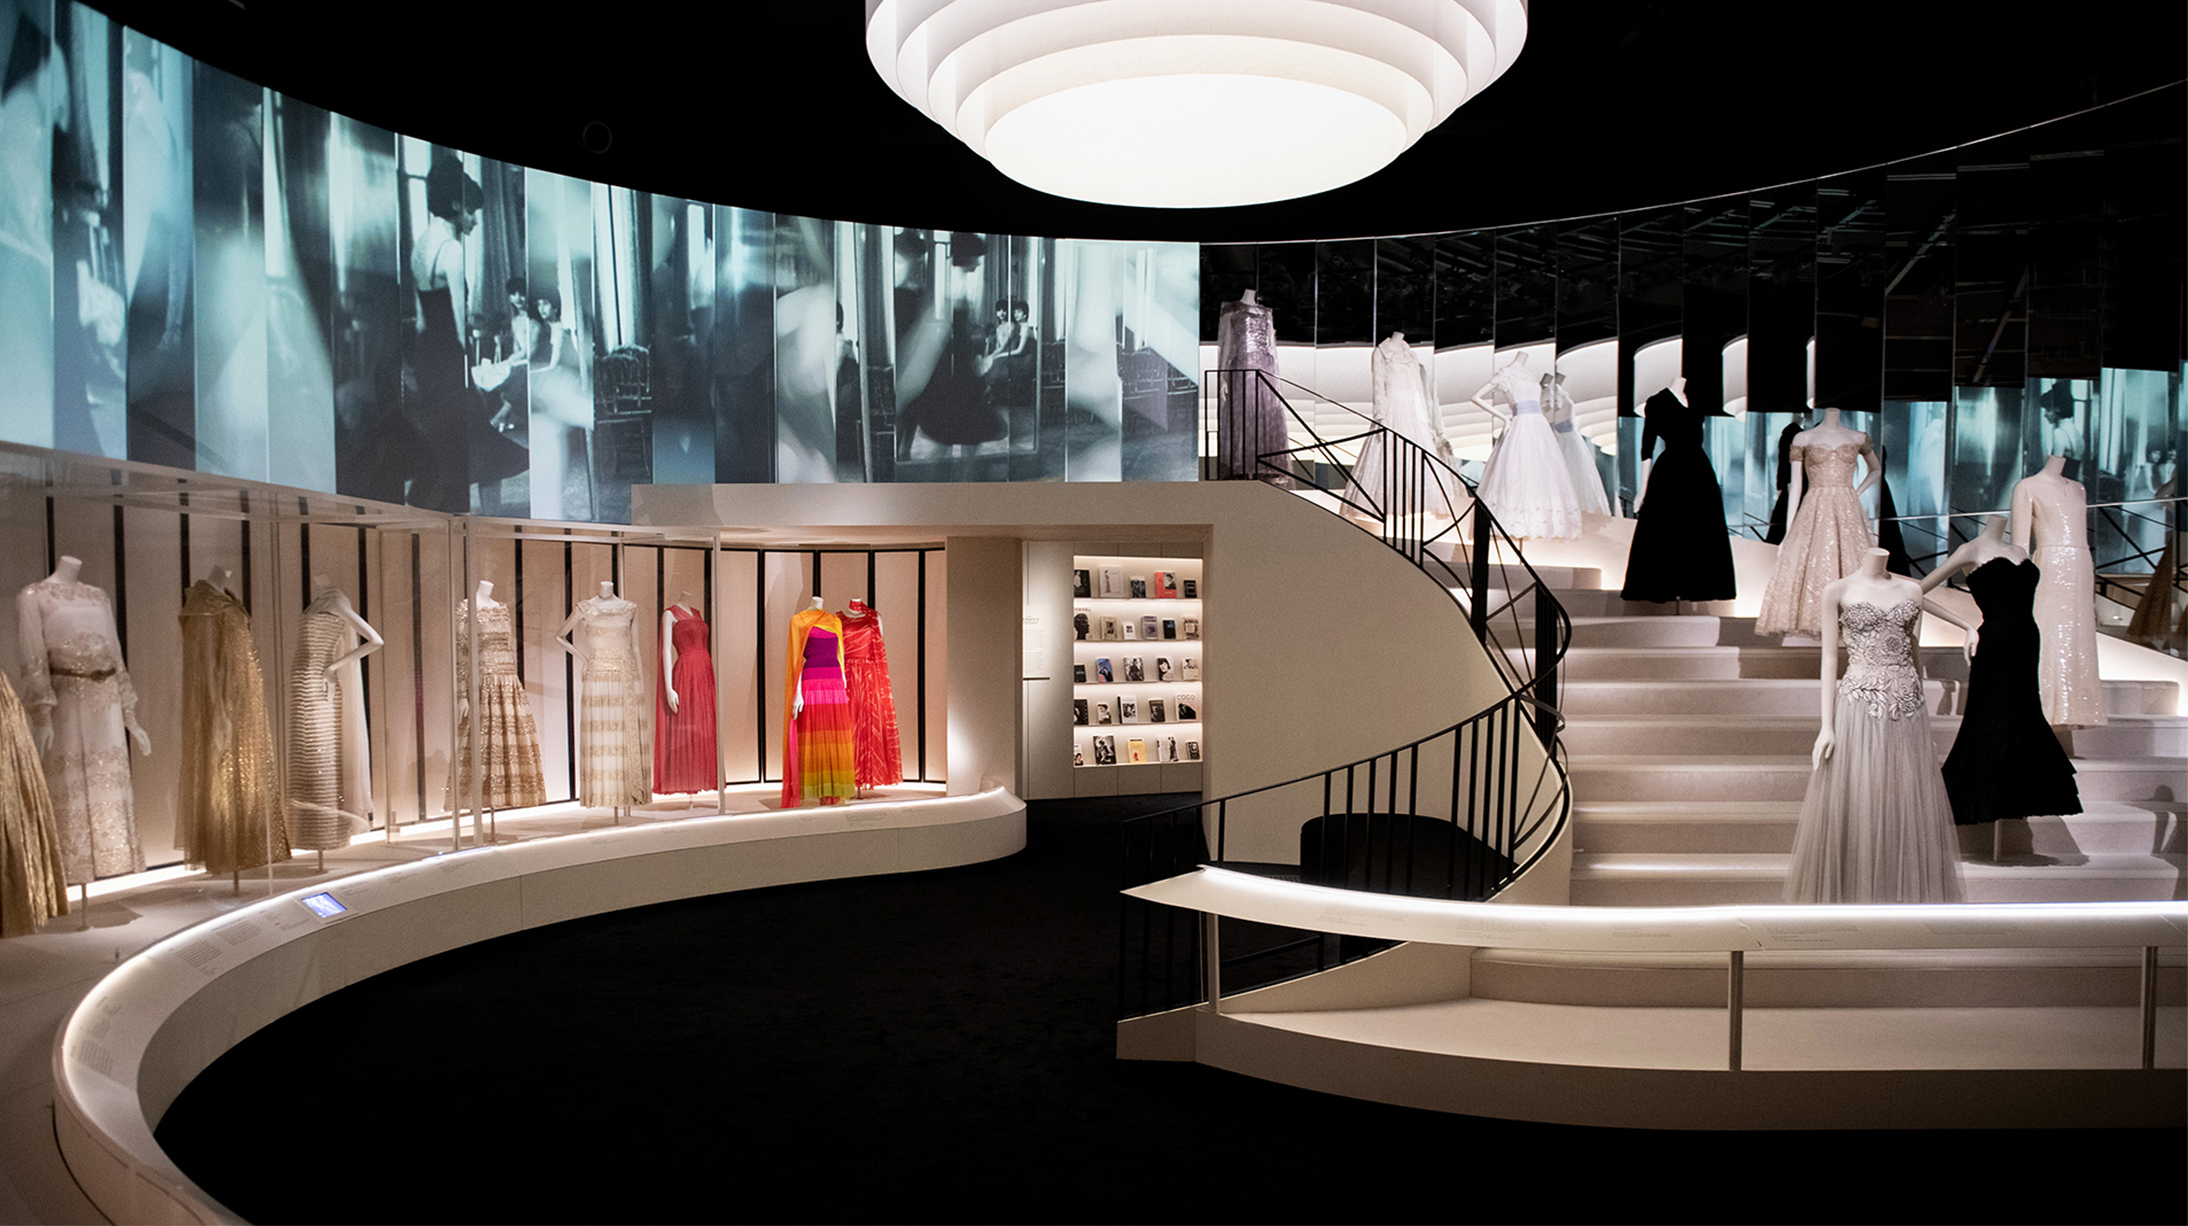 The 'Gabrielle Chanel. Fashion Manifesto' show lands in London